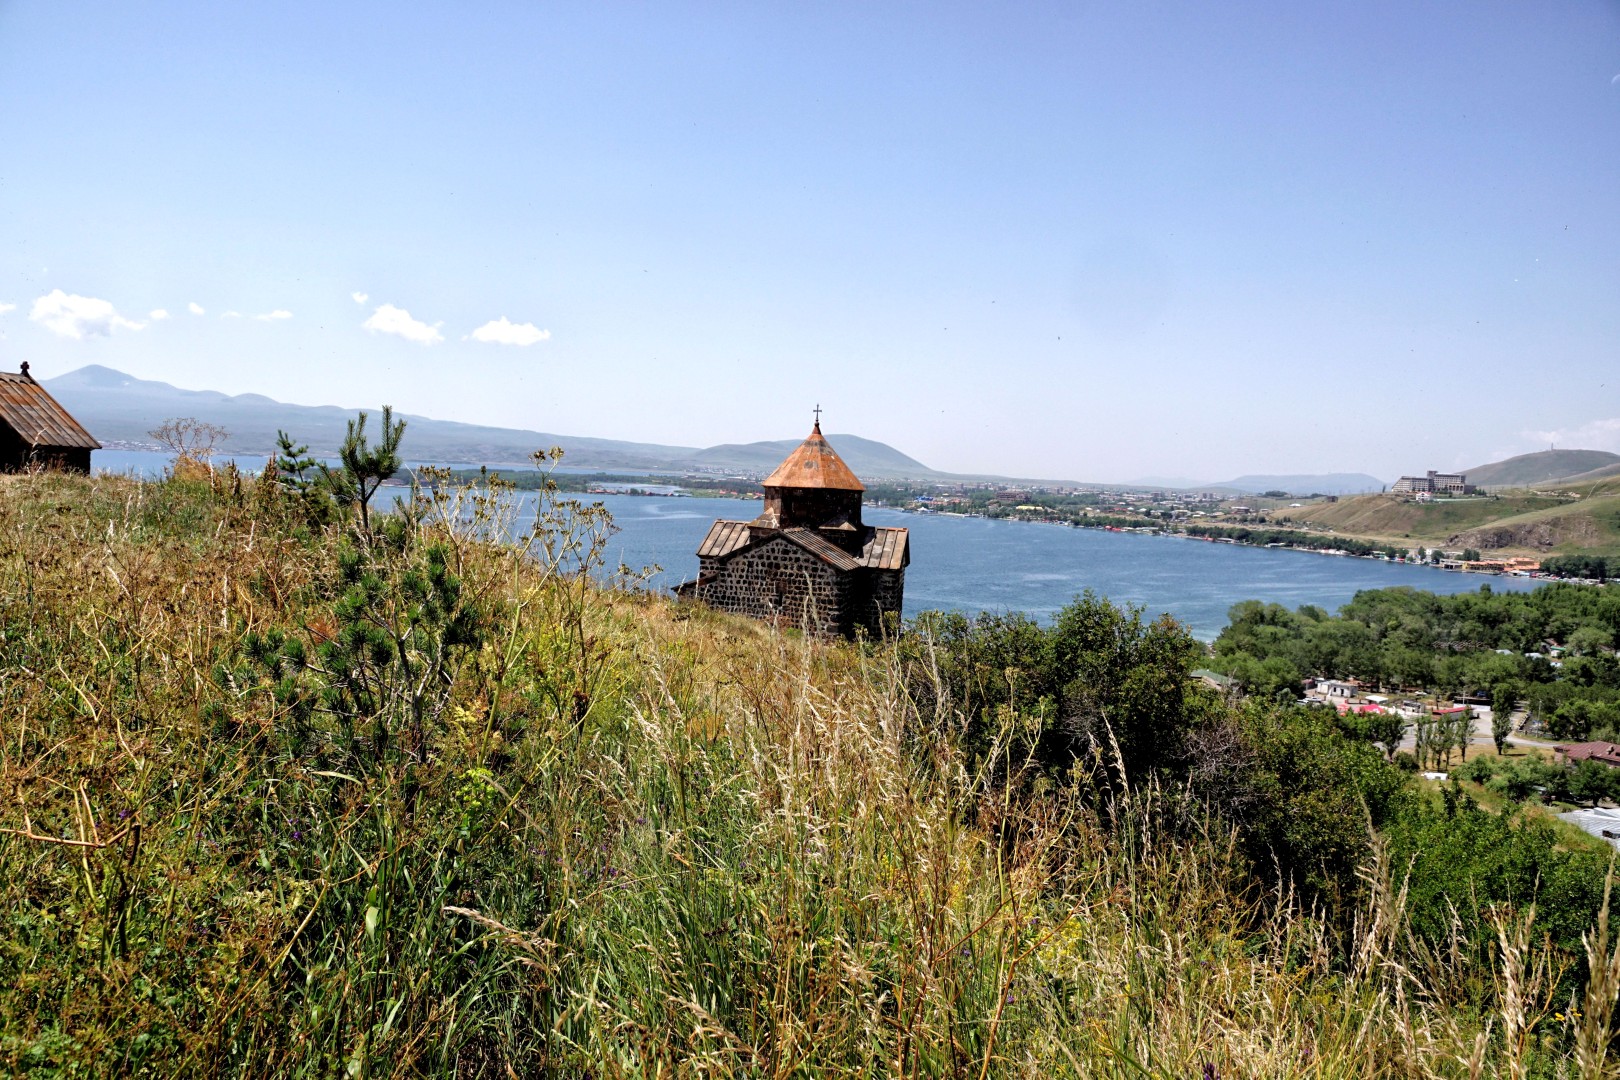 Klasztor Sewanawank wśród wzgórz i wód jeziora Sewan